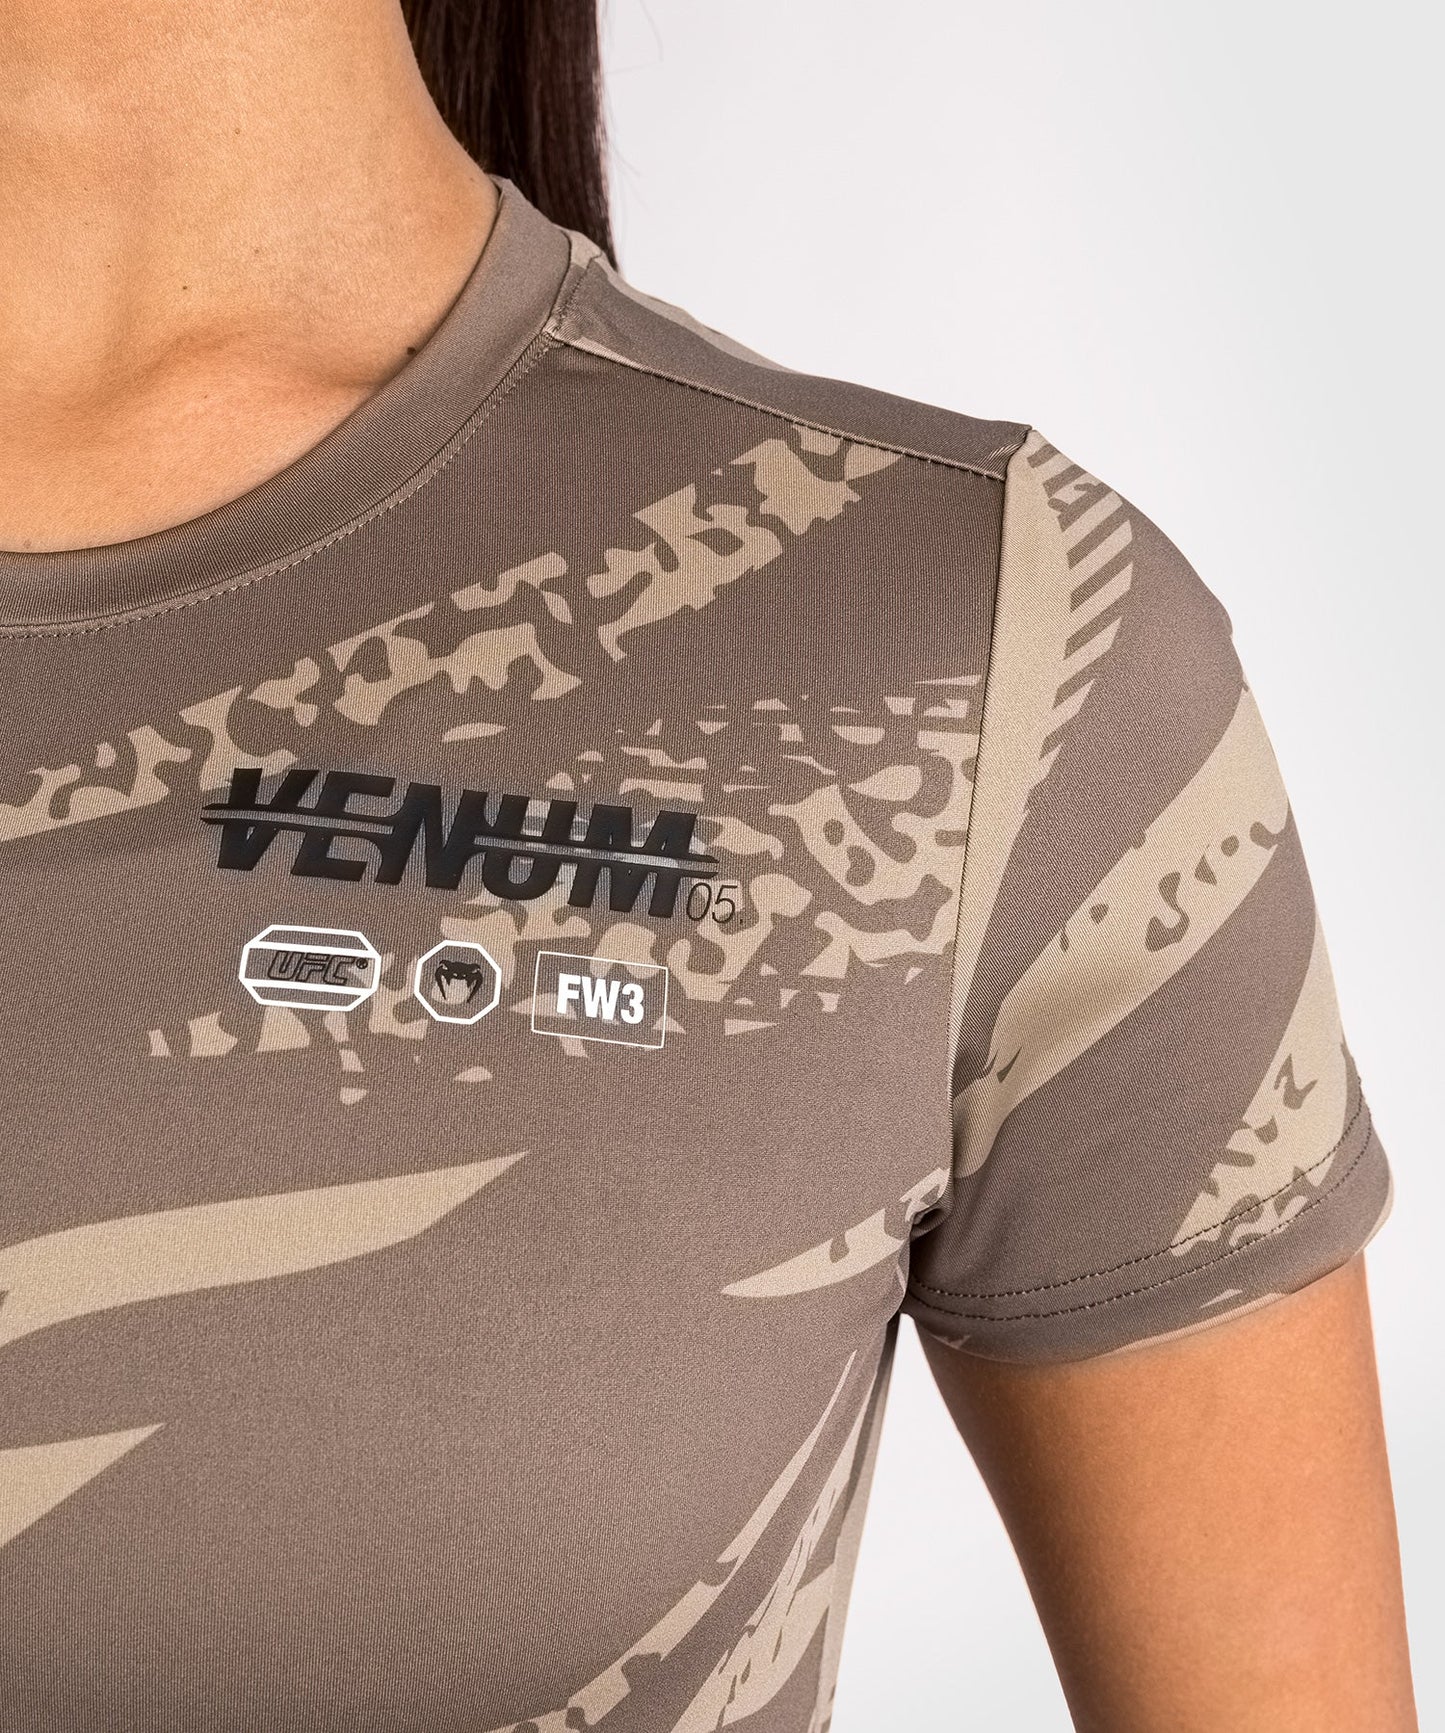 UFC Adrenaline By Venum Fight Week Camiseta de Mujer Dry-Tech - Desert Camo